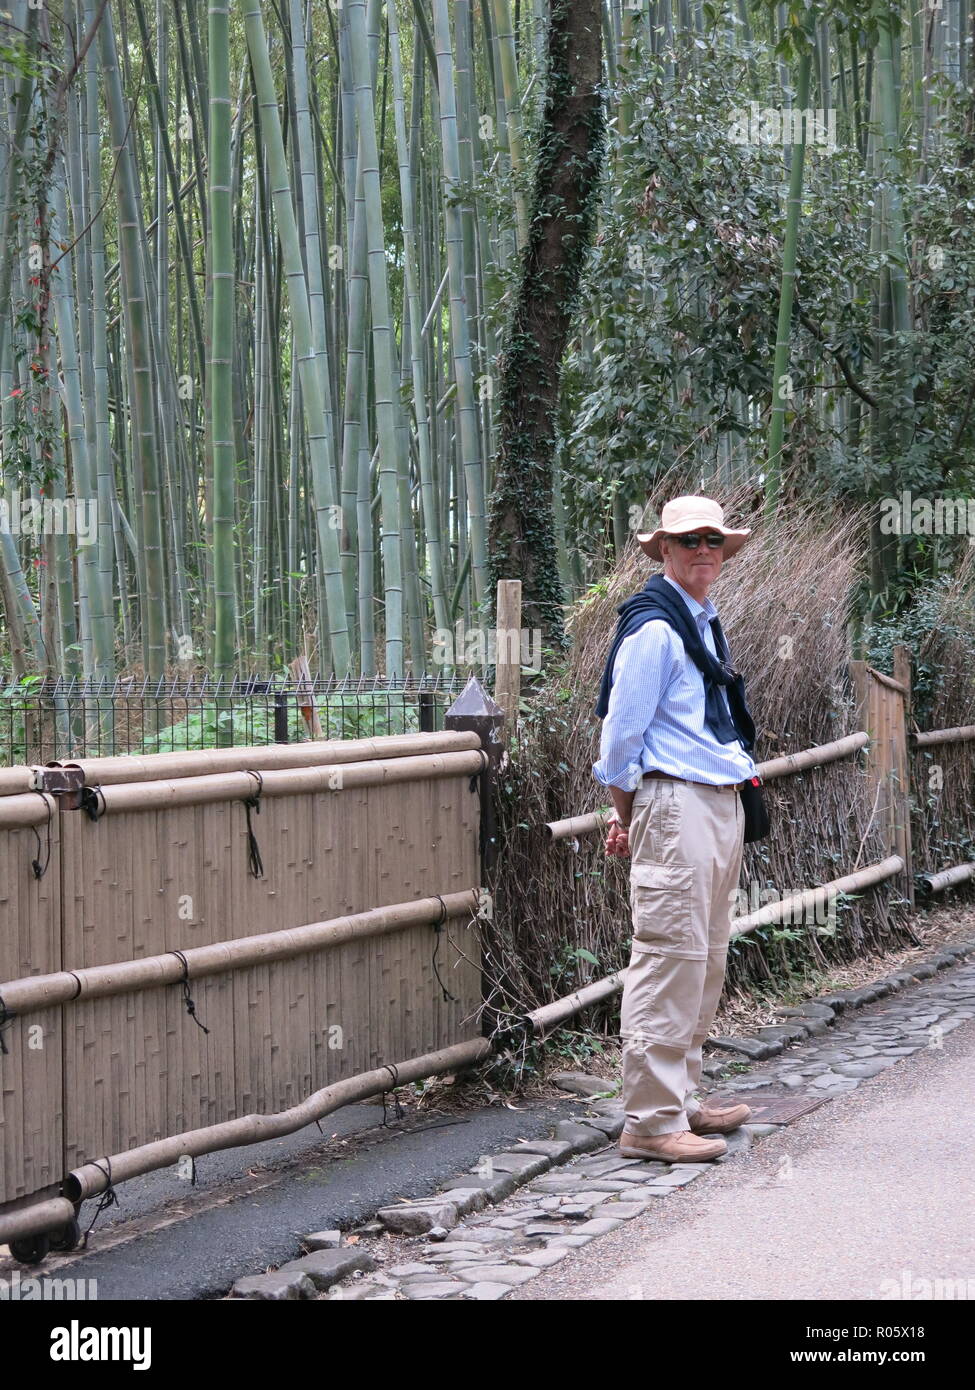 Tall turista inglese è limitata dai torreggianti alberi di bambù! Arashiyama Boschetto di bambù, Sagano Foresta di Bamboo, Kyoto, Giappone Foto Stock